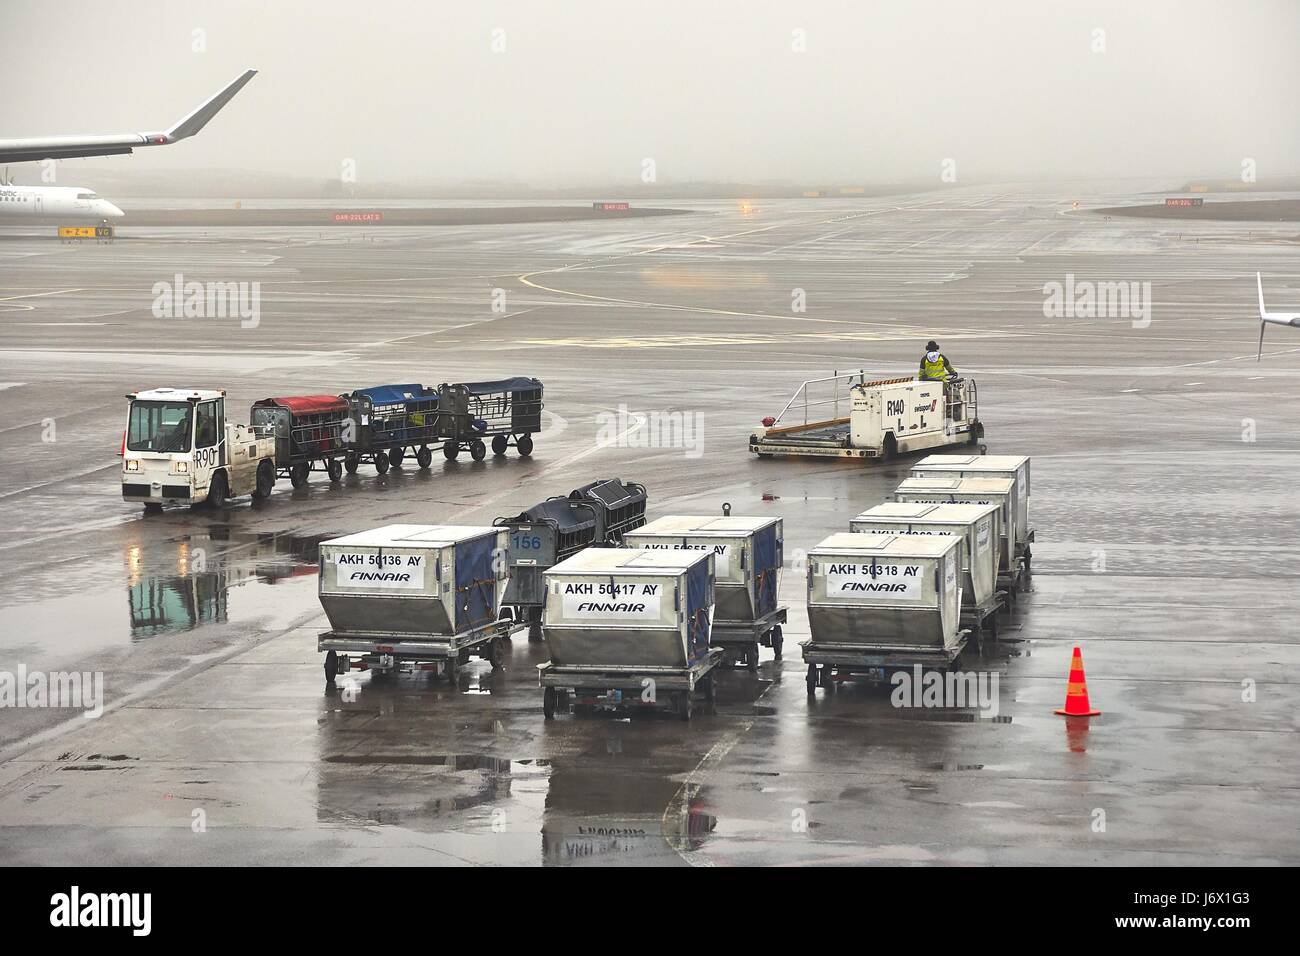 HELSINKI, FINLAND - APRIL 1, 2017: Air cargo unit load devices at Helsinki Internation Airport. Foggy, rainy weather. Stock Photo